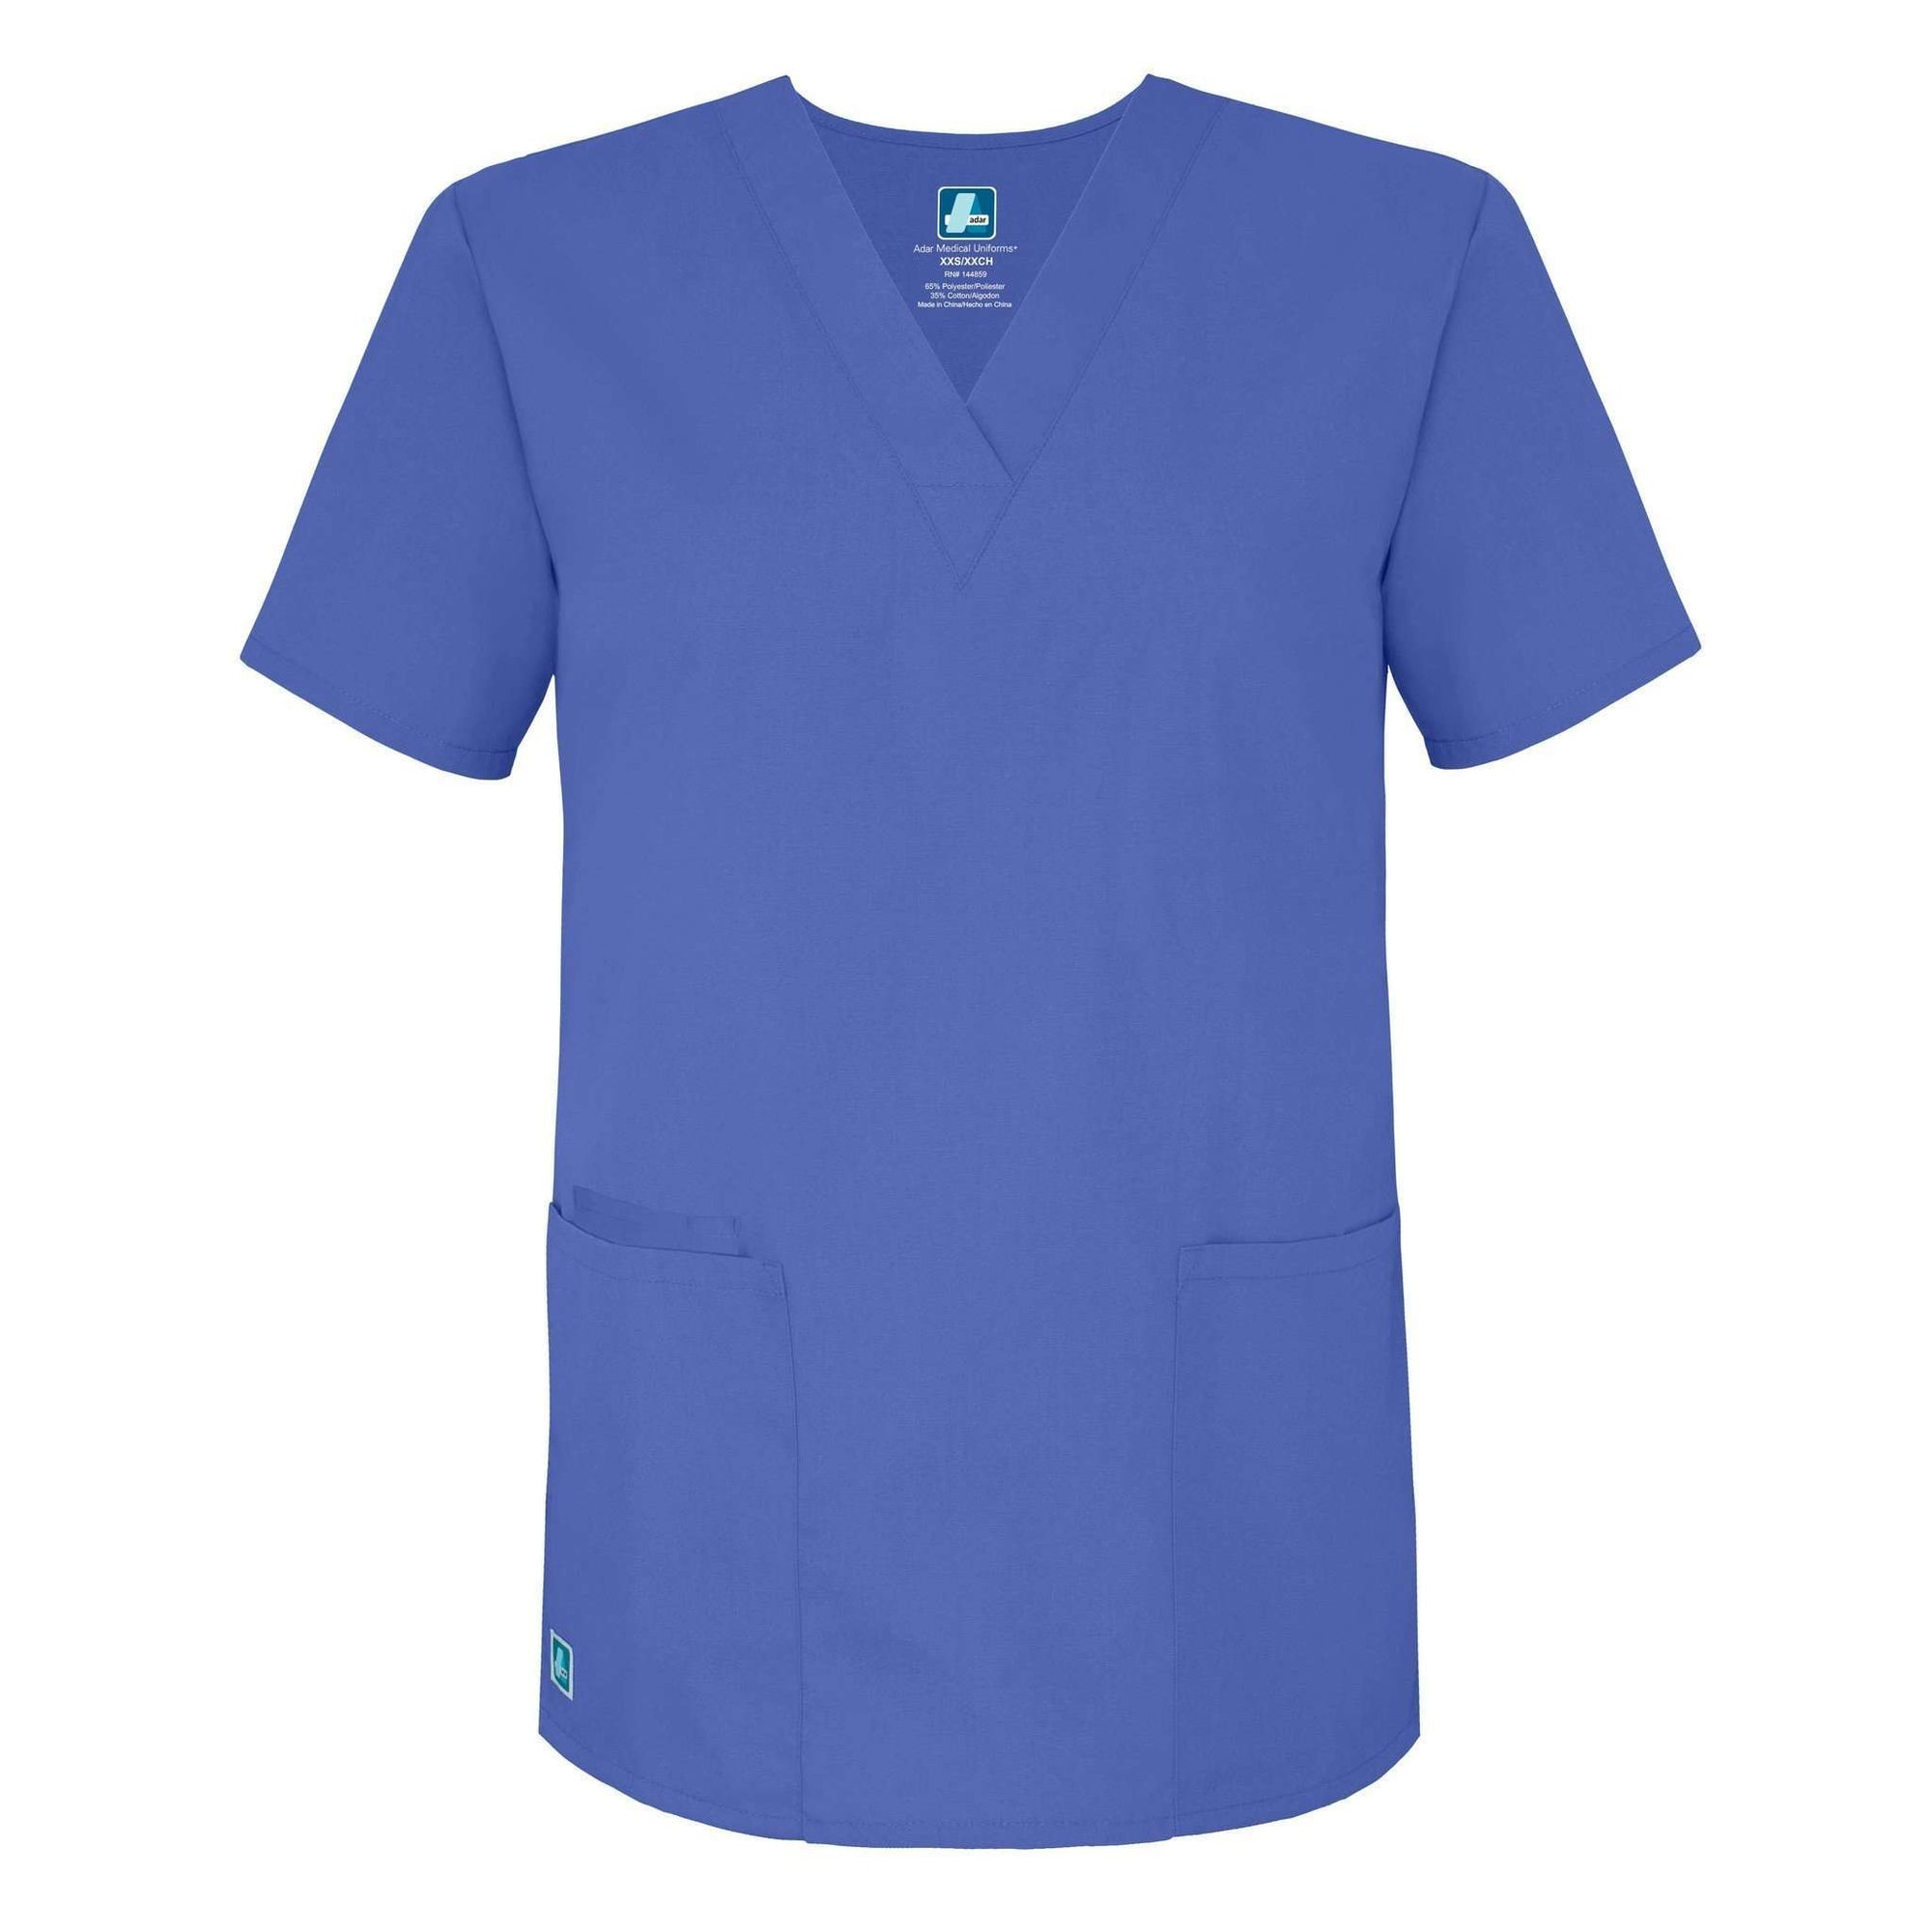  Adar - uniforms Medical Uniform Tops uniforms online Adar Universal Unisex V-Neck 2 Pocket Scrub Top Ceil Blue M - SchoolUniforms.com